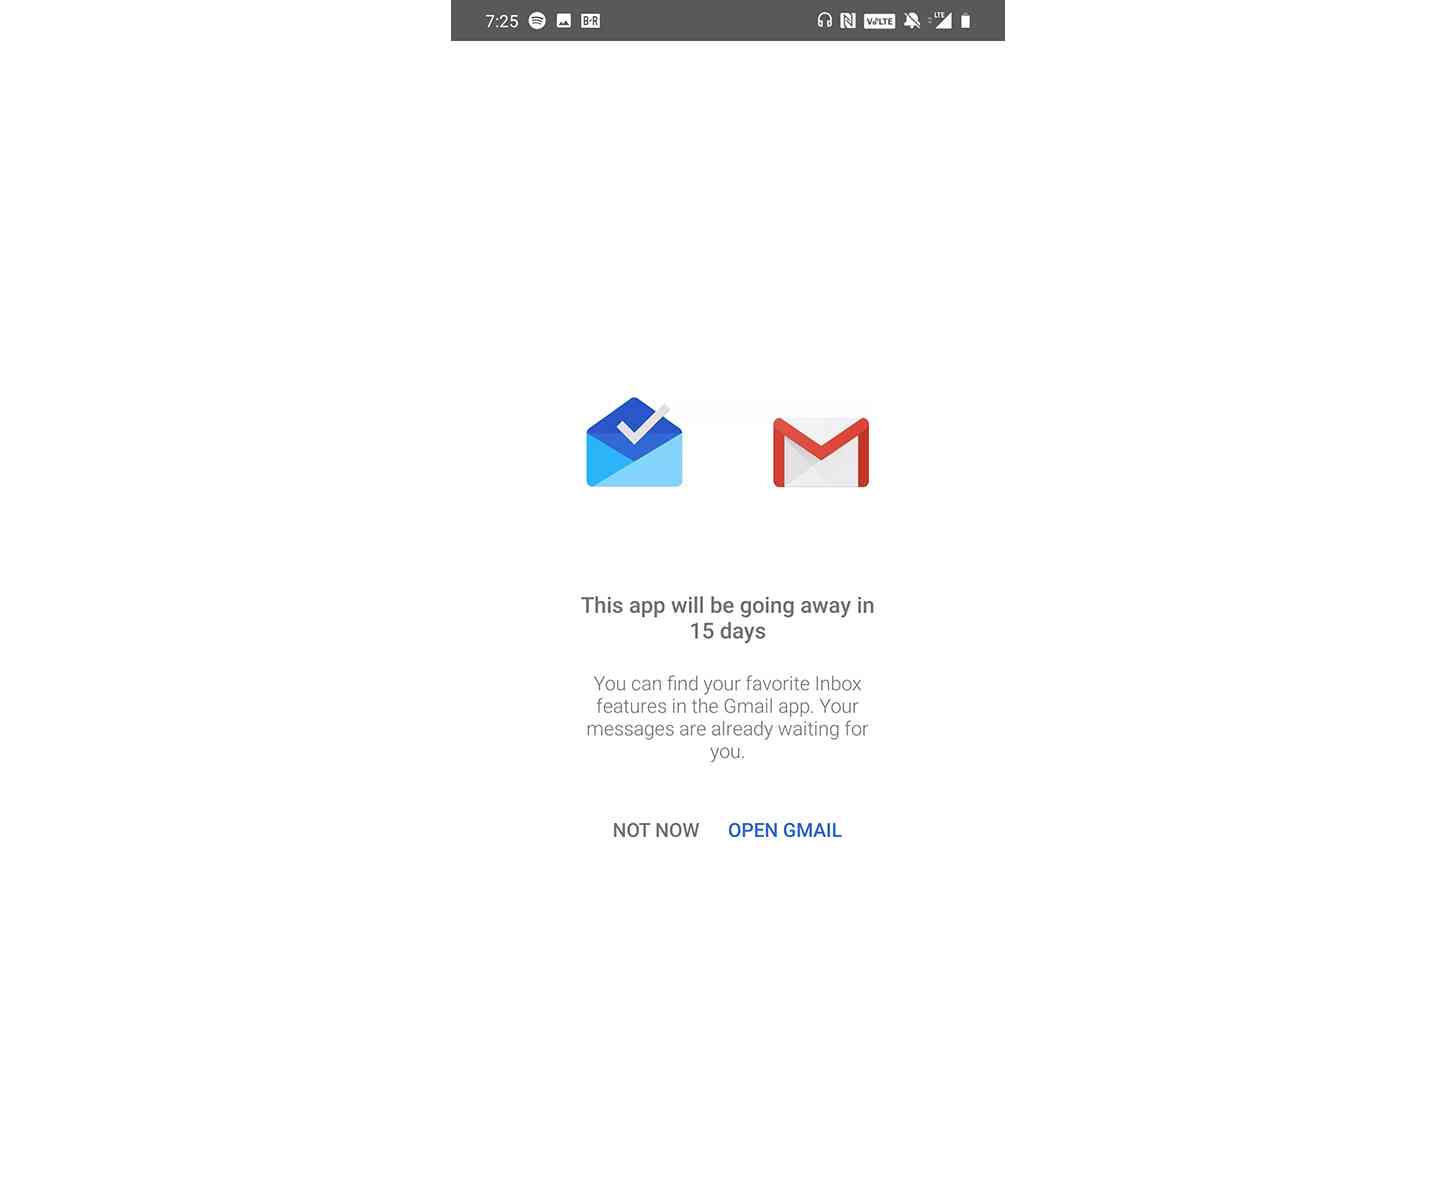 Inbox by Gmail shutdown